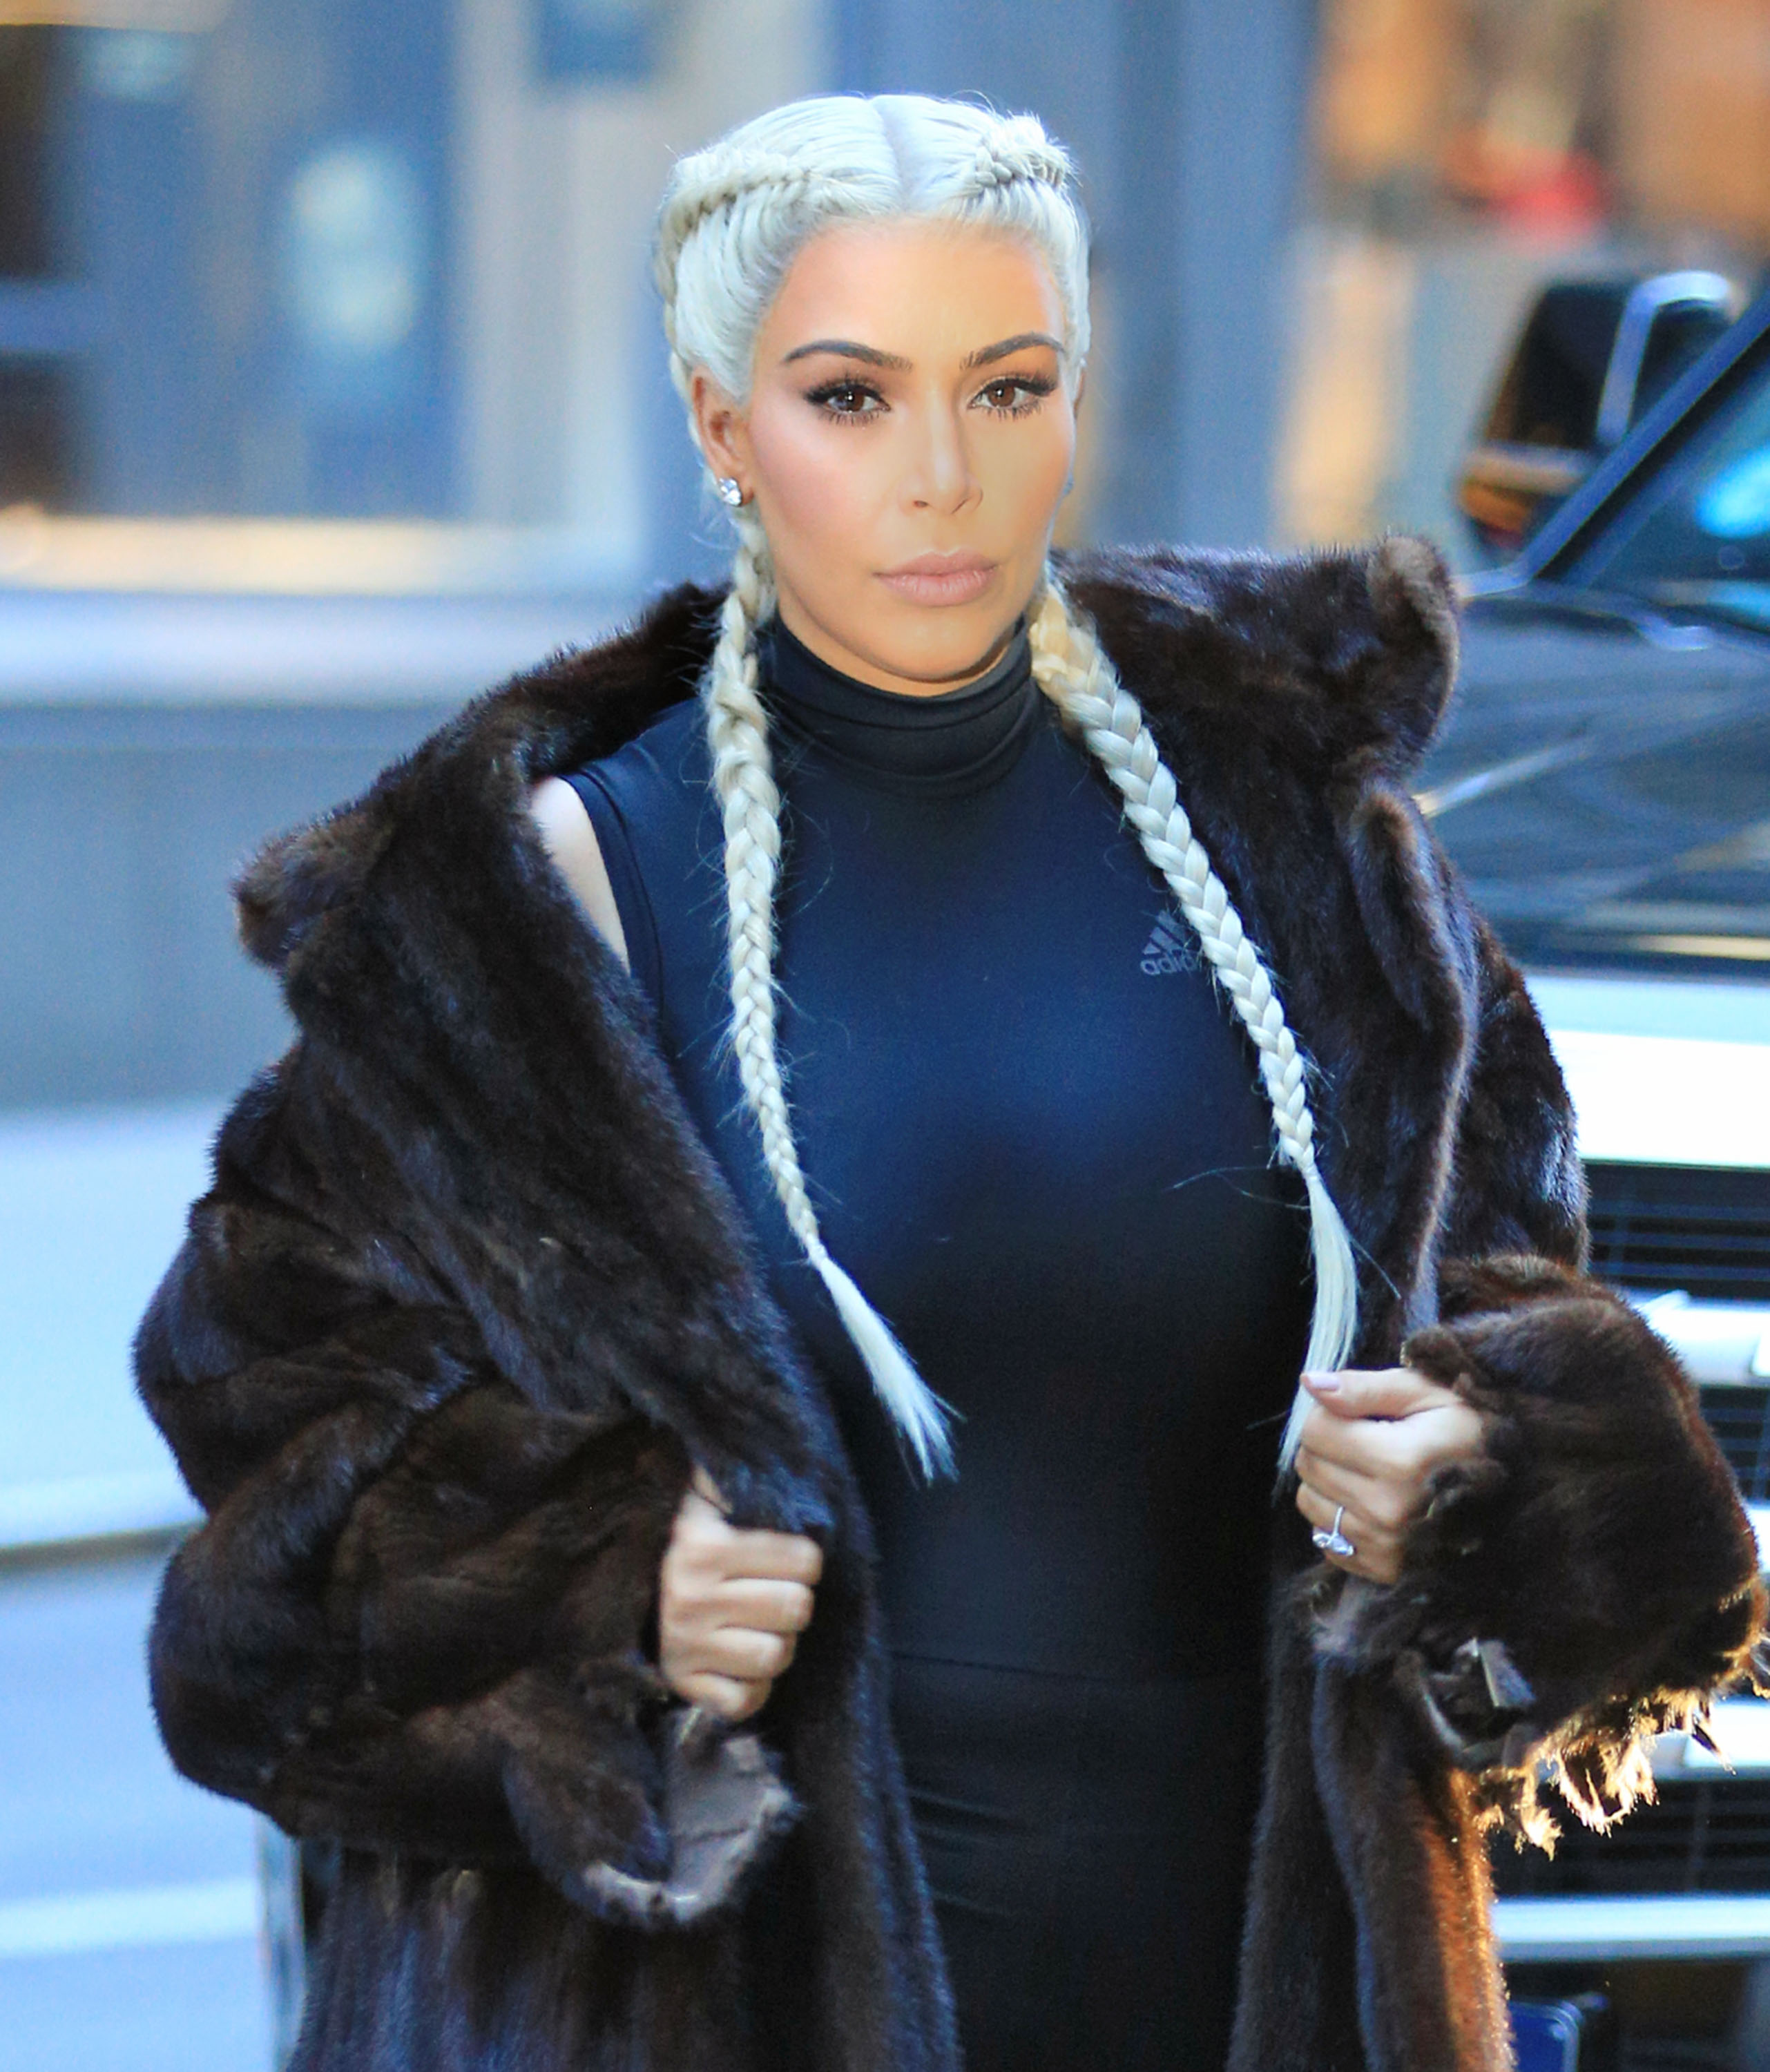 Kim Kardashian wears sports tights under fur coat with braided blonde hair in NYC Pictured: Kim Kardashian Ref: SPL1226850 130216 Picture by: Jackson Lee / Splash News Splash News and Pictures Los Angeles:310-821-2666 New York: 212-619-2666 London: 870-934-2666 photodesk@splashnews.com 